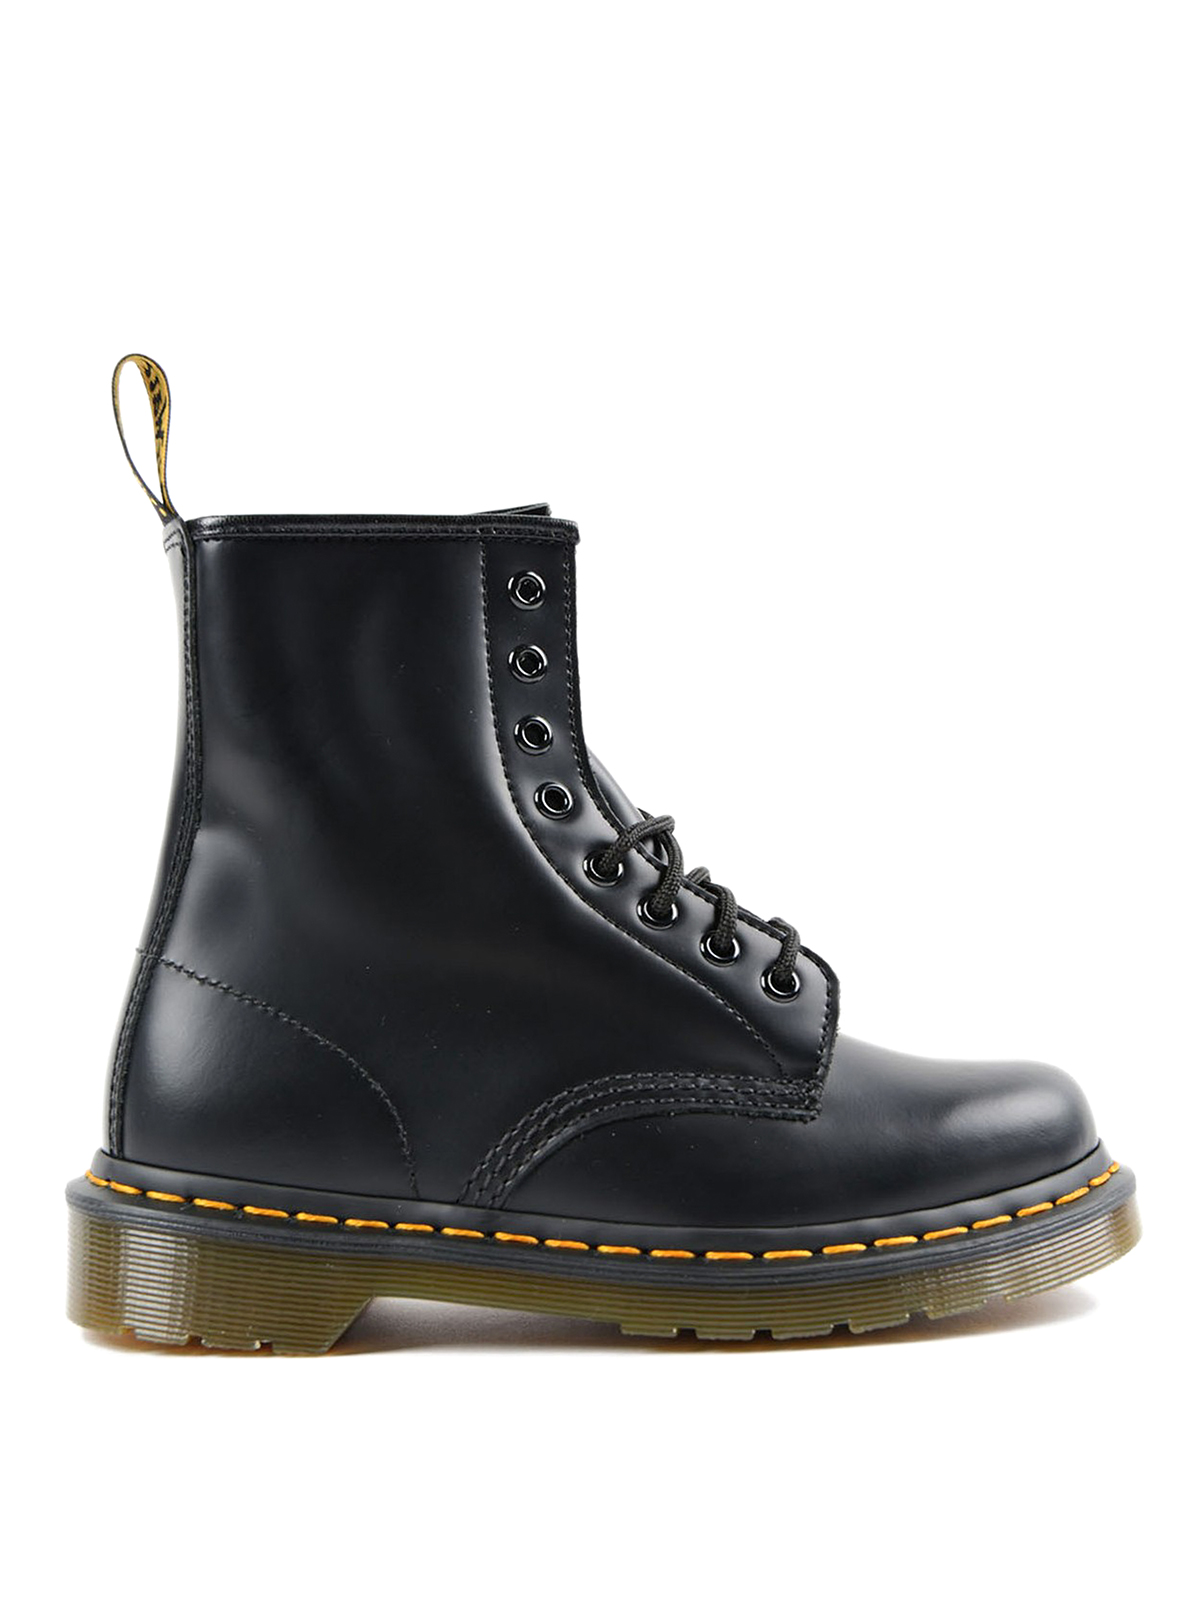 Shop Dr. Martens' Black Smooth Leather Combat Boots